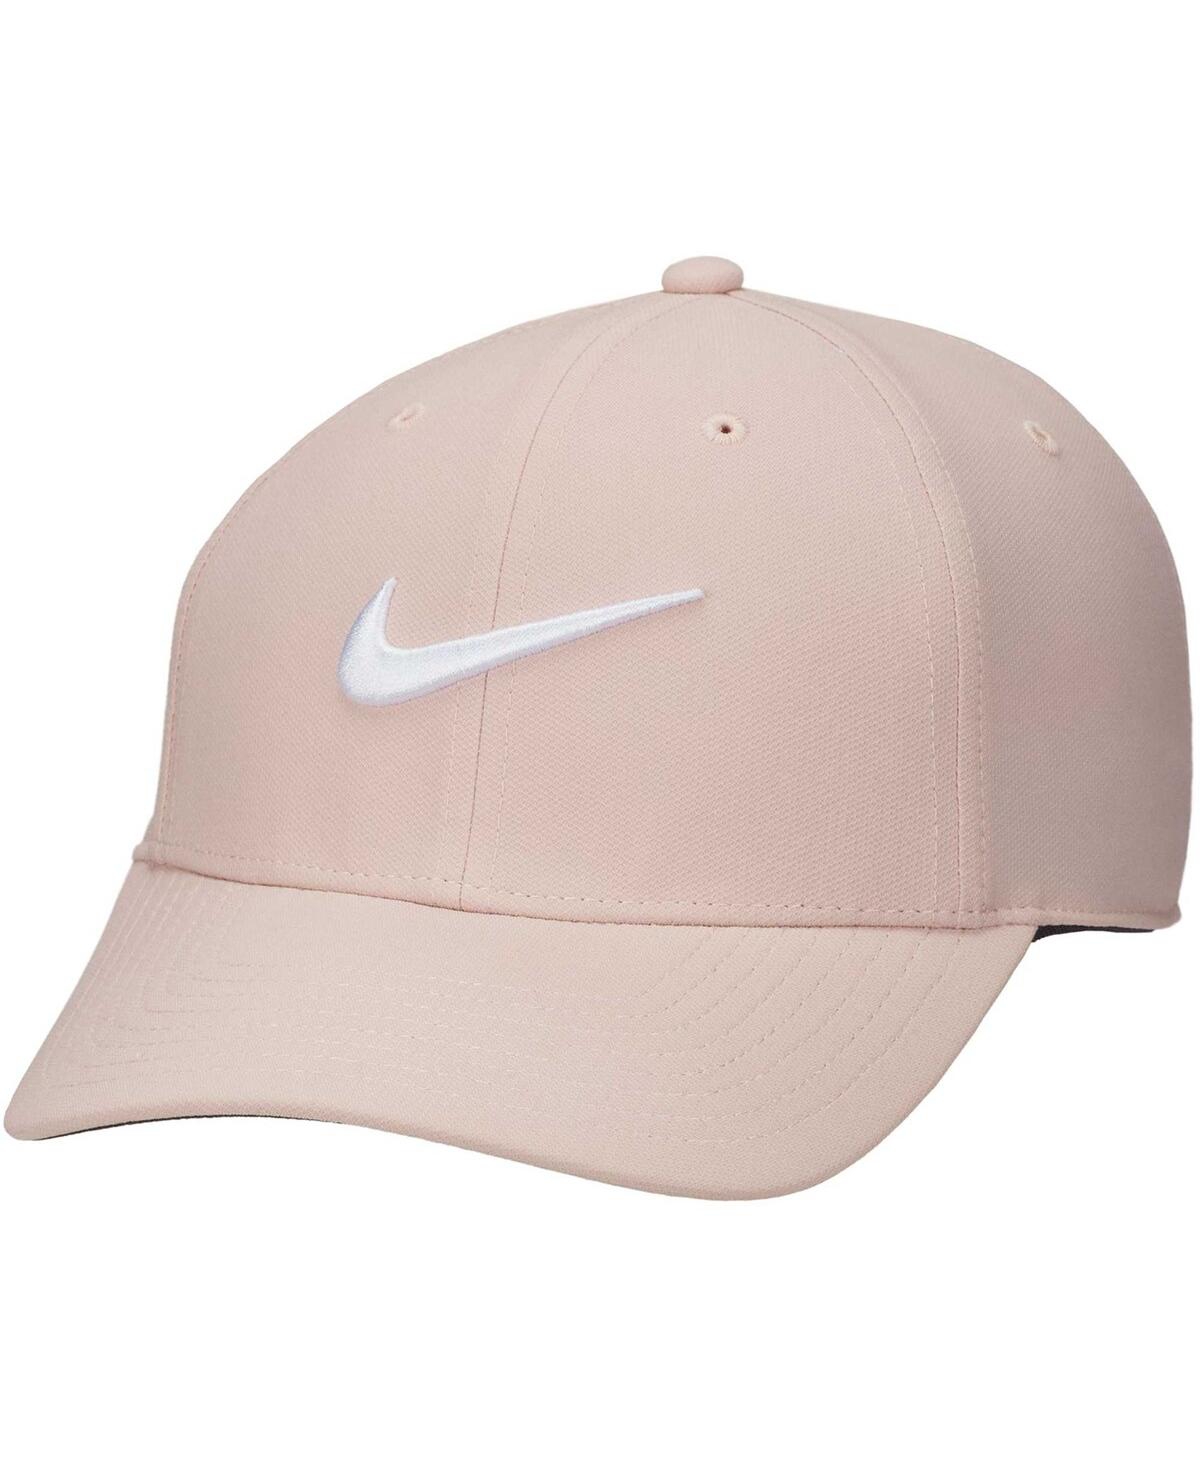 Men's Nike Light Pink Club Performance Adjustable Hat - Pink